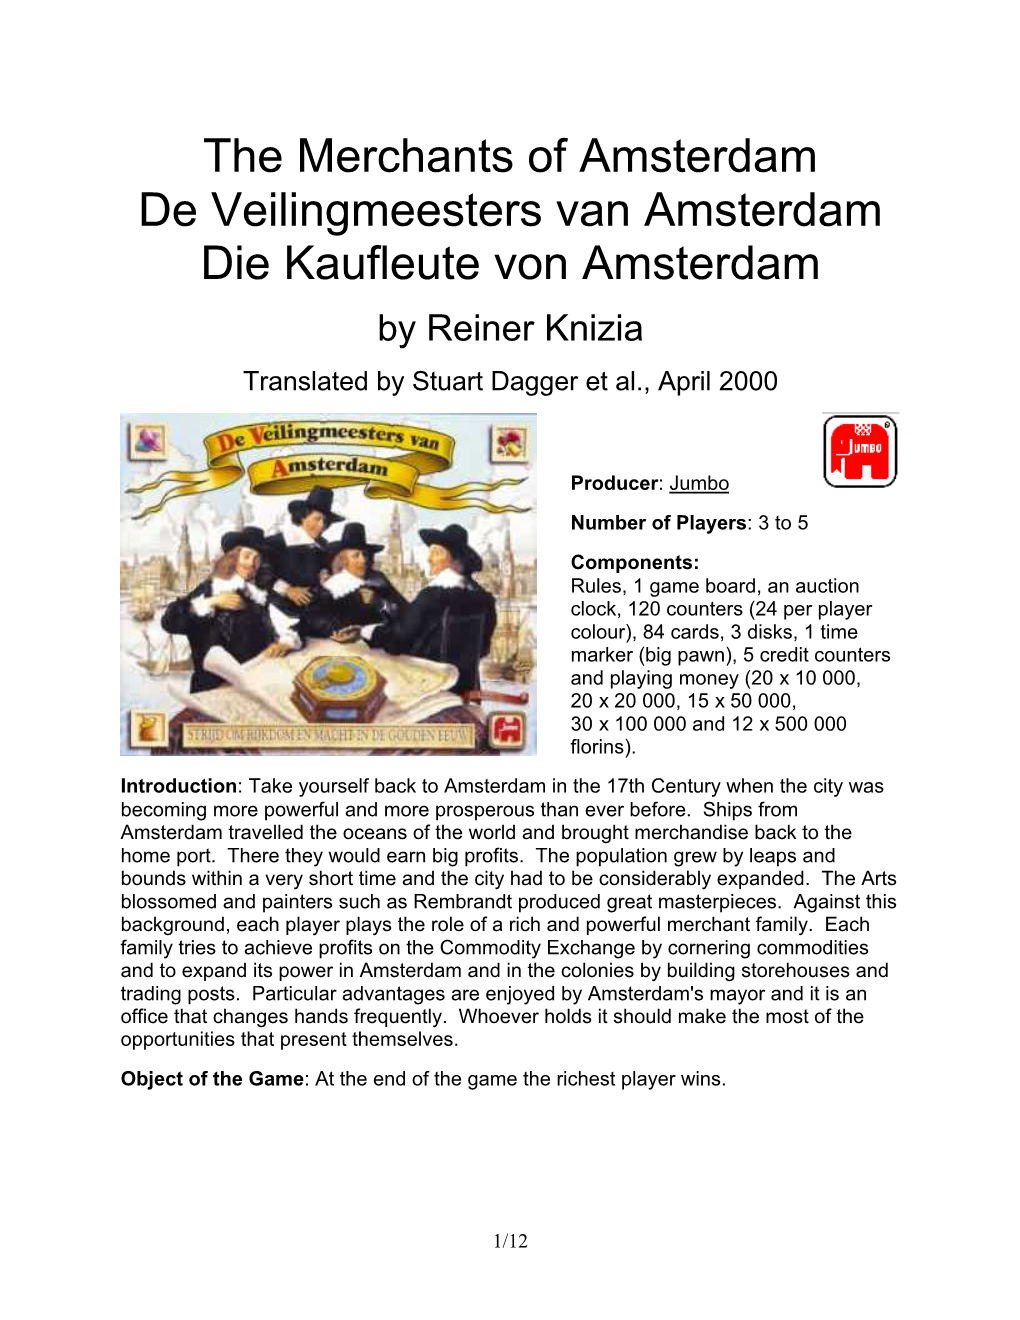 The Merchants of Amsterdam De Veilingmeesters Van Amsterdam Die Kaufleute Von Amsterdam by Reiner Knizia Translated by Stuart Dagger Et Al., April 2000